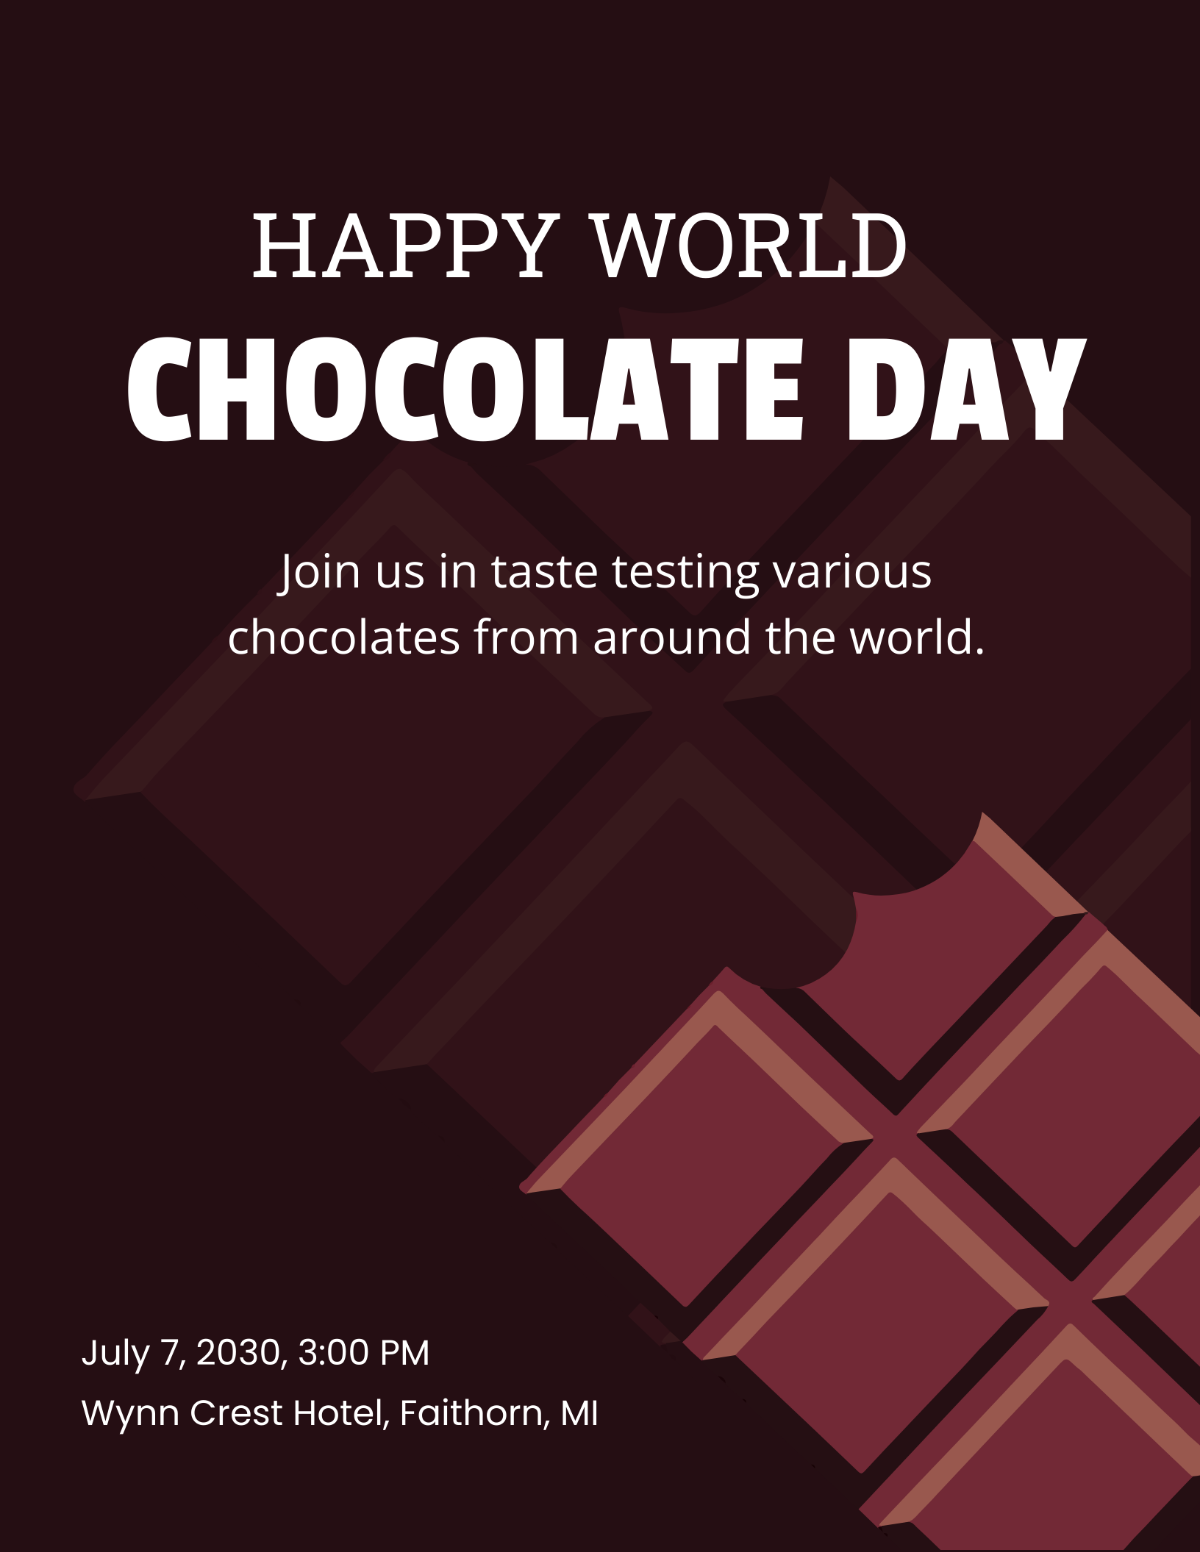 Free World Chocolate Day Pinterest Pin Template